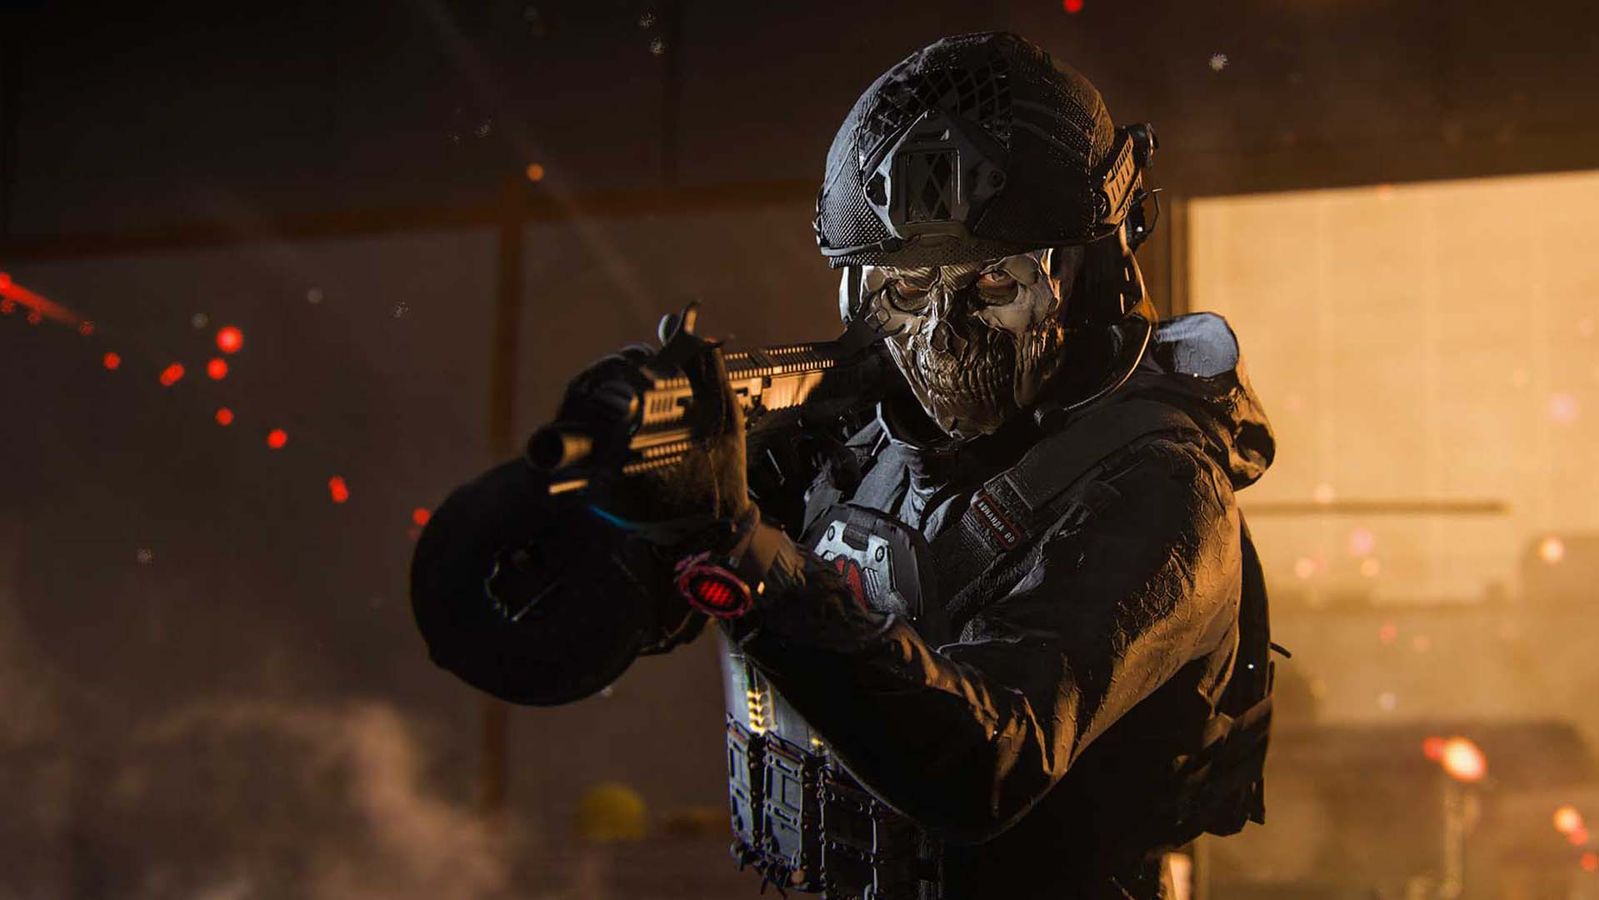 Modern Warfare 3 player aiming down sights of rifle